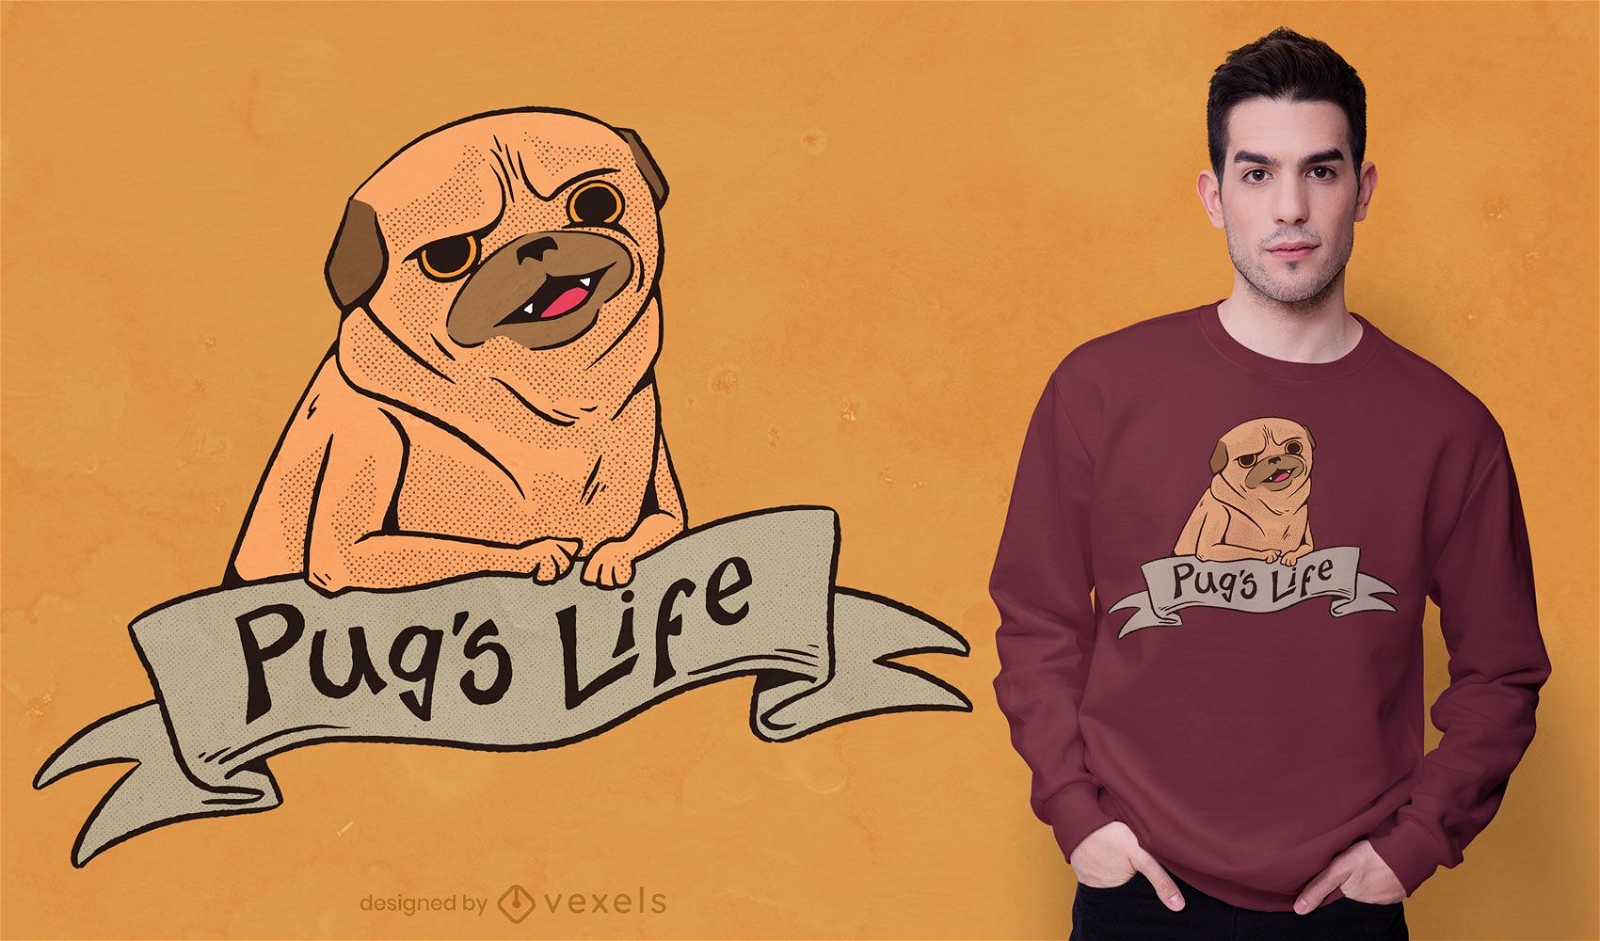 Pug's life t-shirt design